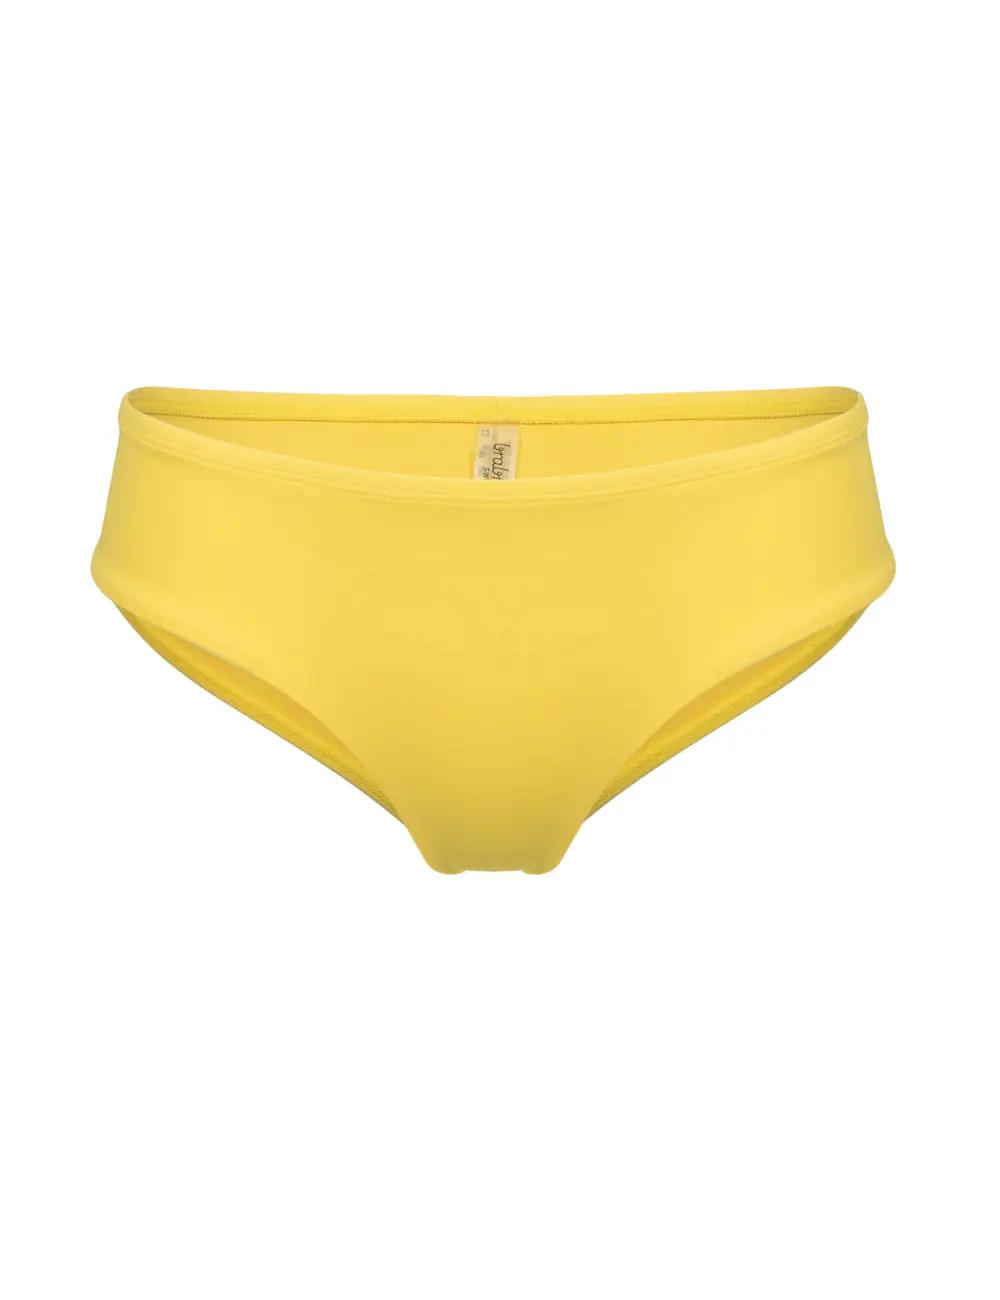 Majtki kąpielowe briefy 004SM żółte